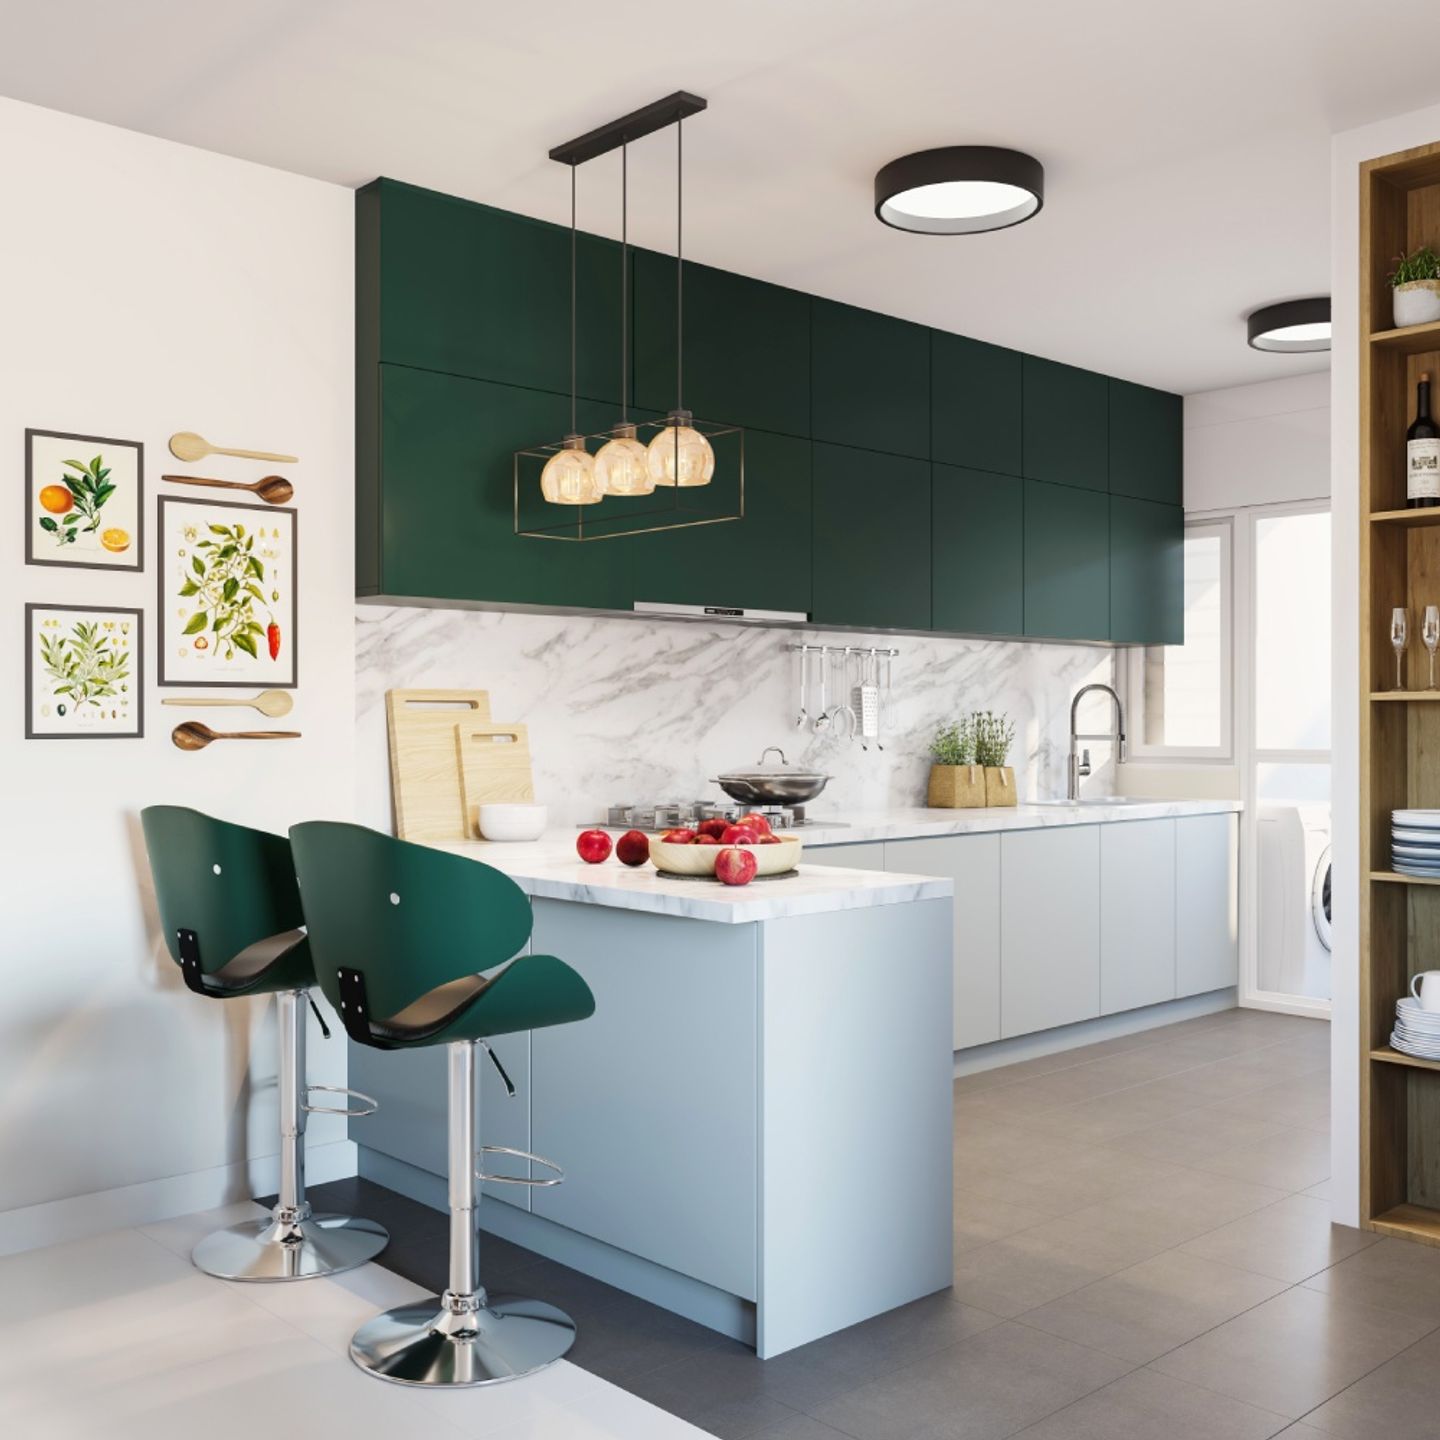 12x11 Ft Modular Open Kitchen Design In Grey And Emerald Tones - Livspace